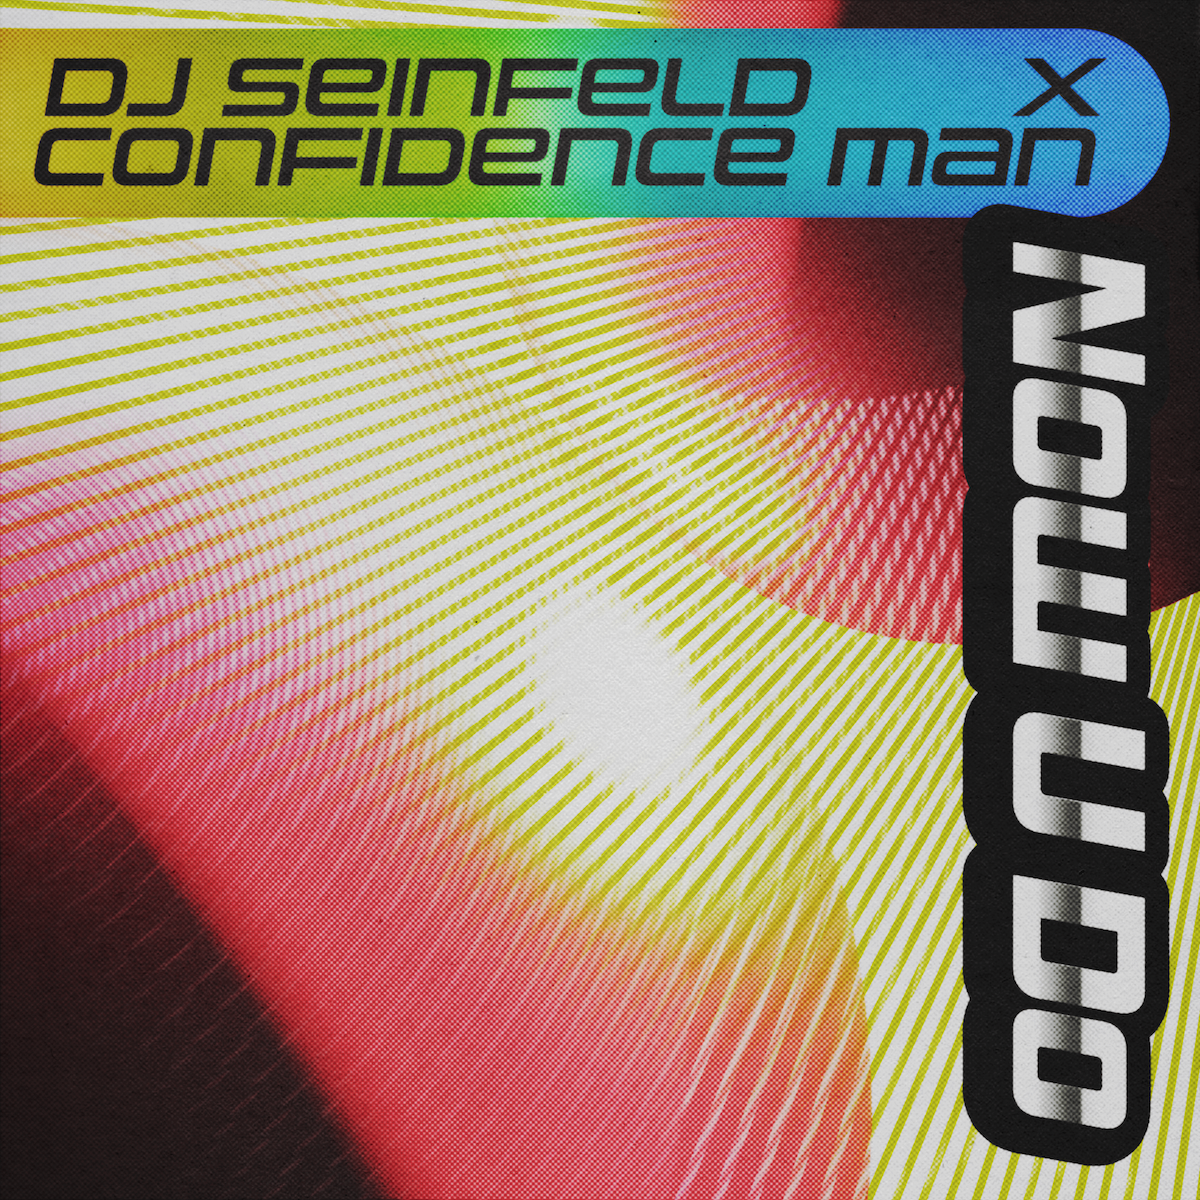 DJ Seinfeld & Confidence Man - Now U Do EP | Buy the Vinyl LP from Flying Nun Records